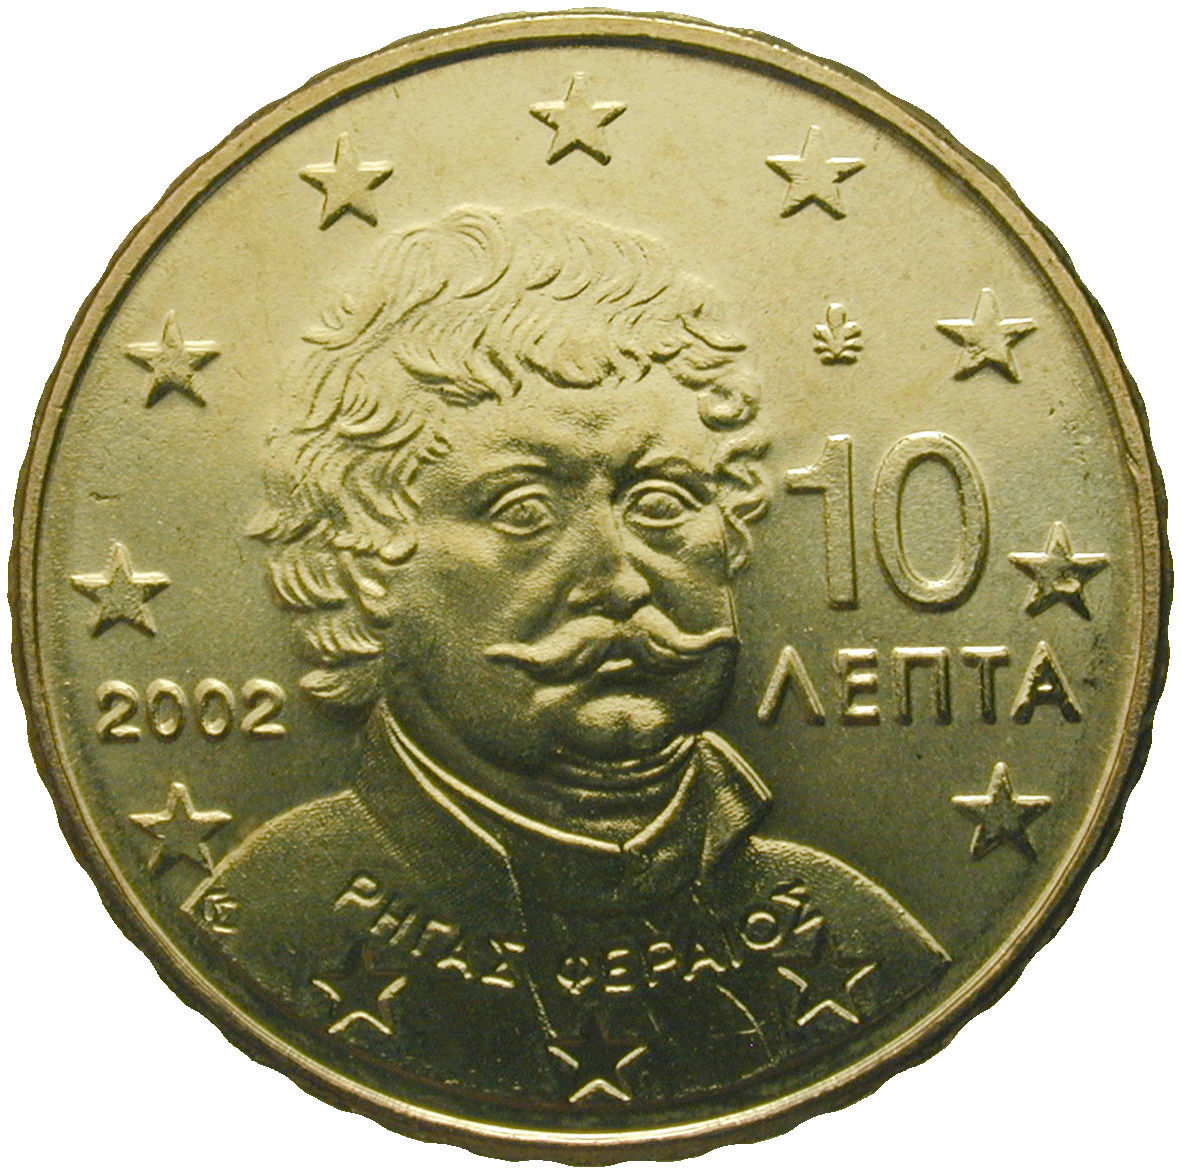 Republic of Greece, 10 Euro Cent 2002 (obverse)